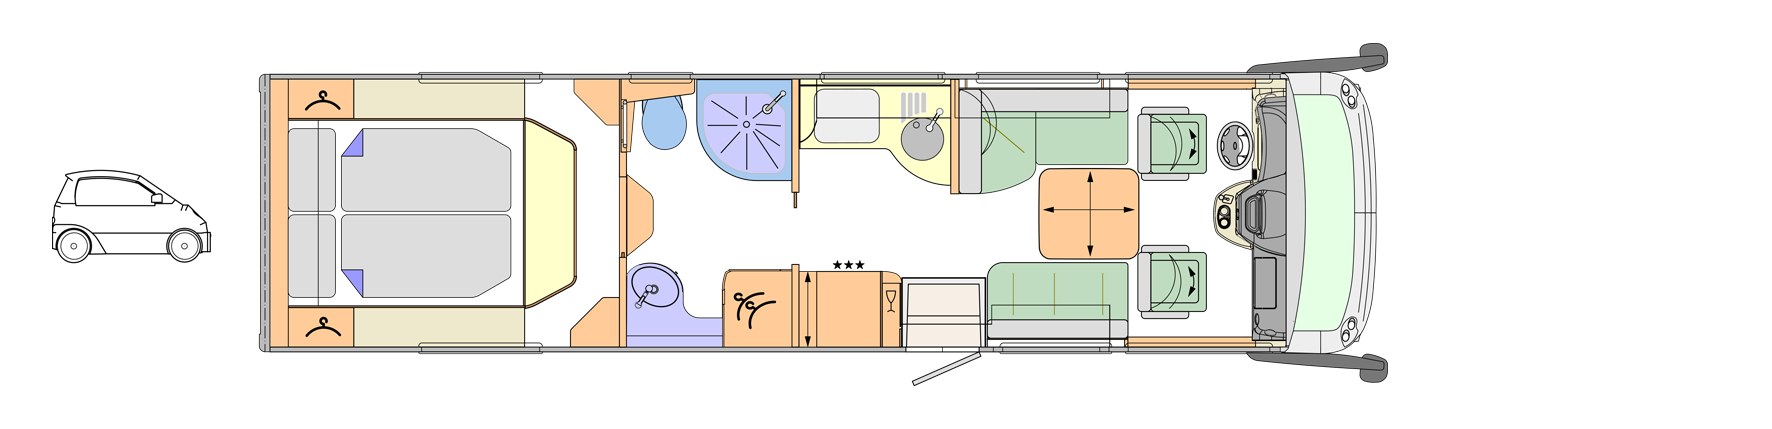 2019 Concorde Charisma 920G A-Class Motorhome Floorplan Layout